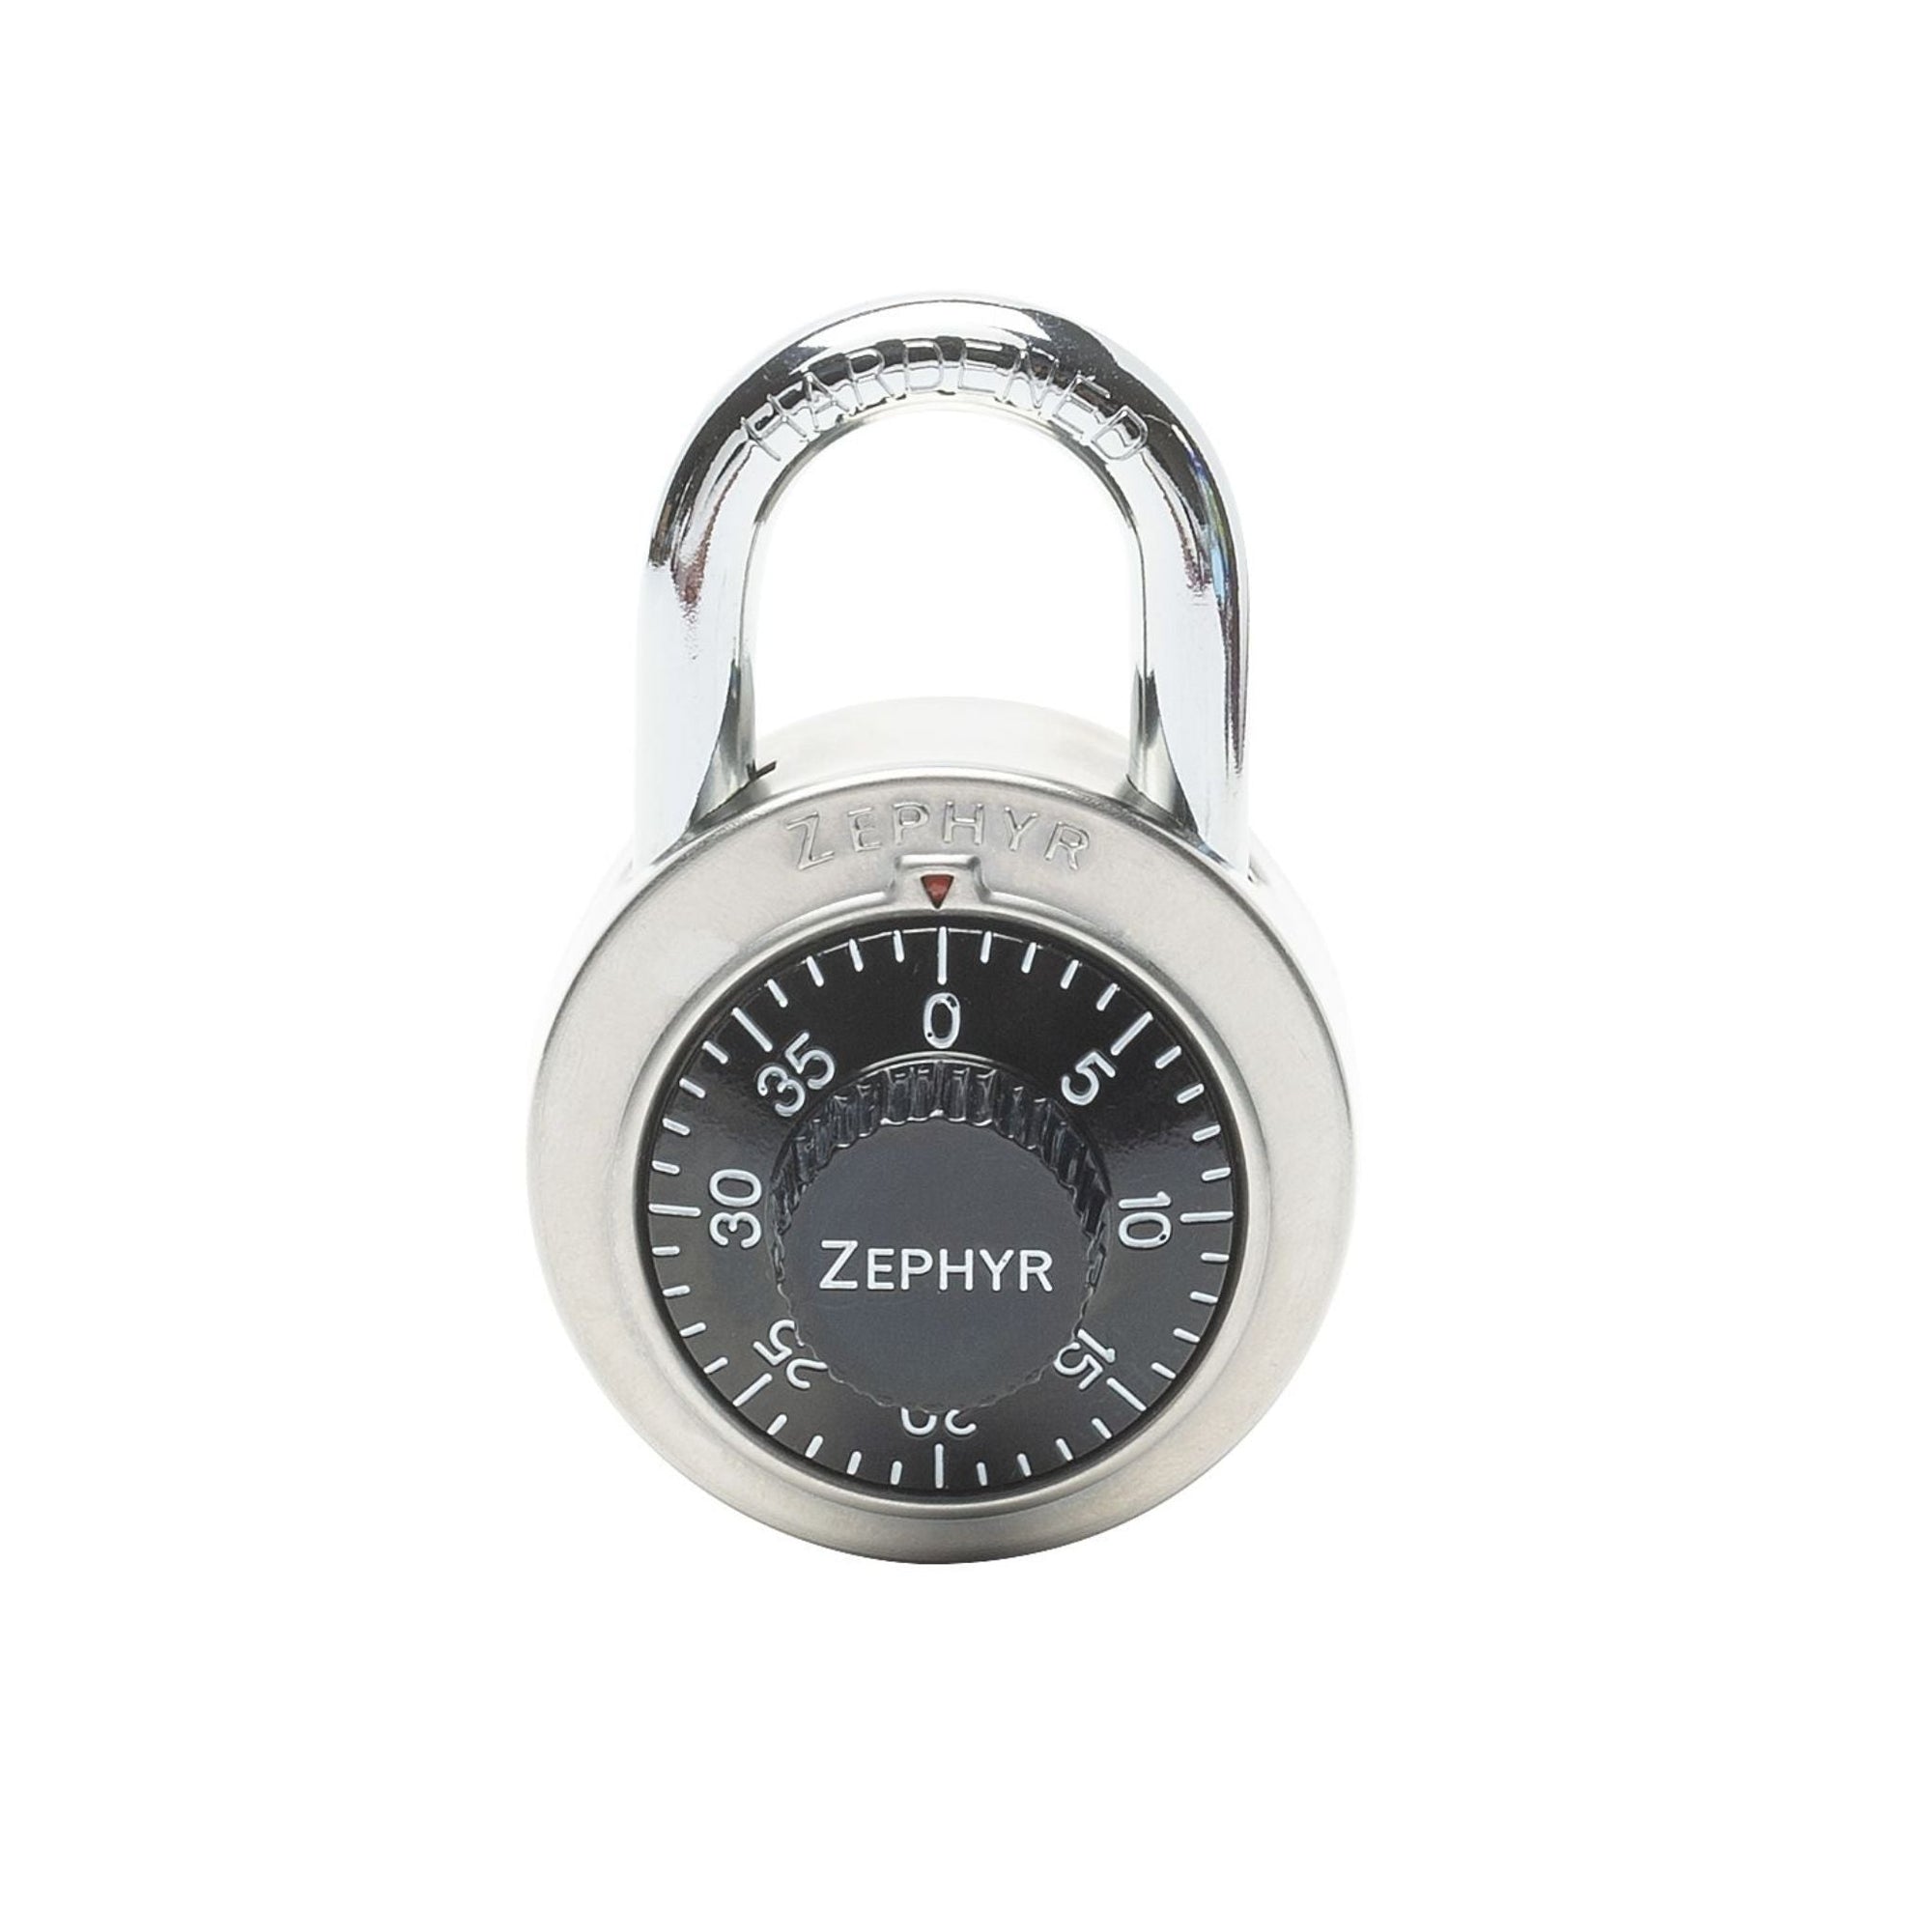 Zephyr Lock 1902 Combination Padlock Fits Virtually All Locker Locks - The Lock Source